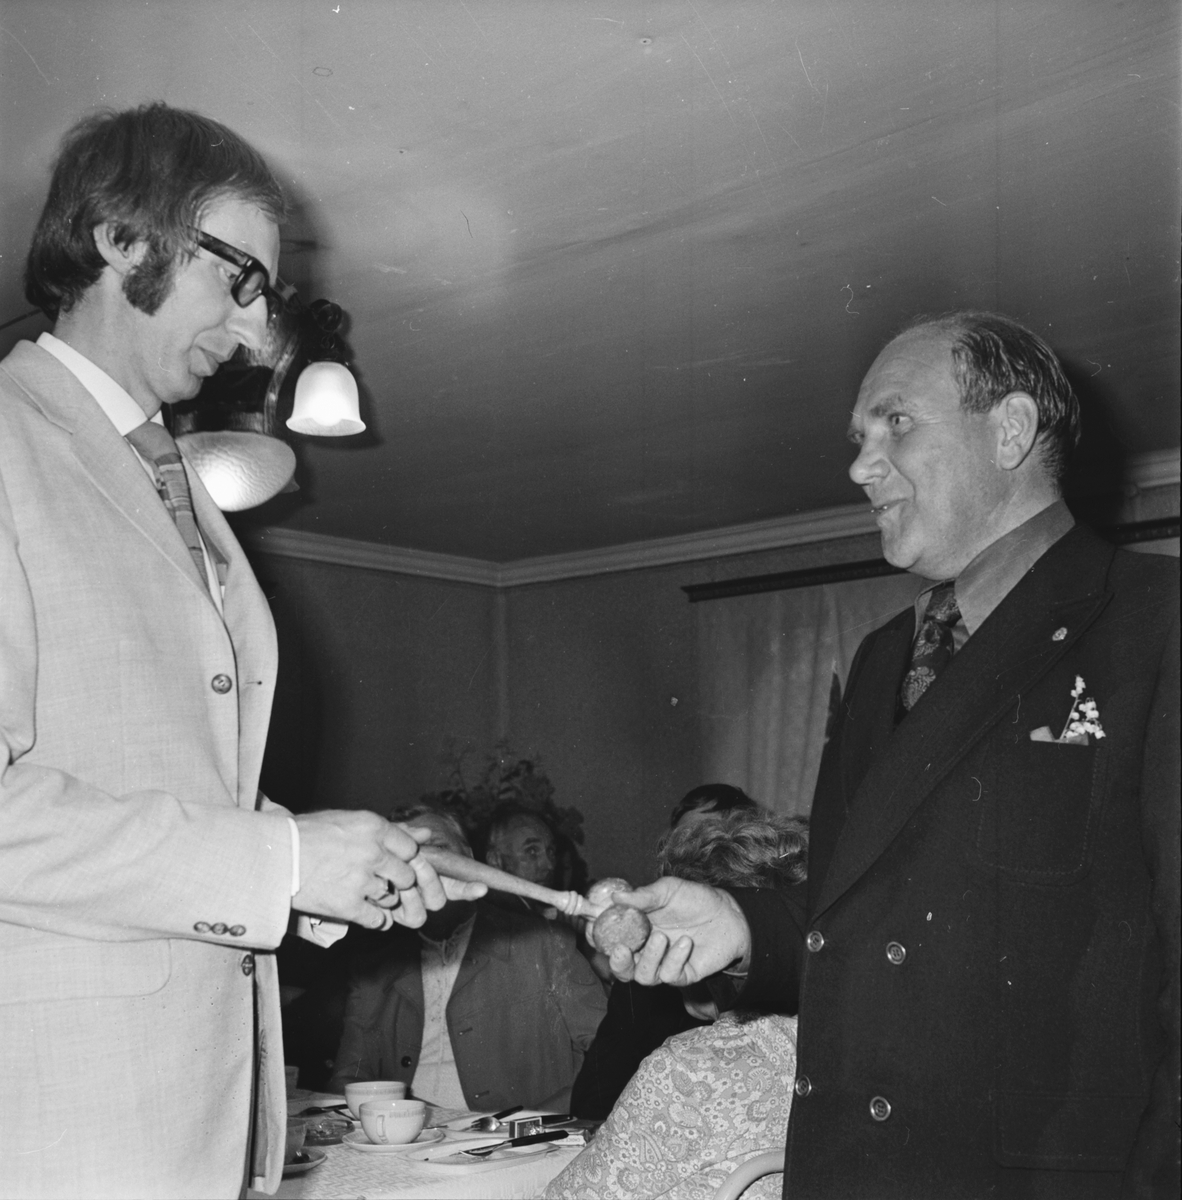 Arbrå Lion,
Presidentvalet juli 1972